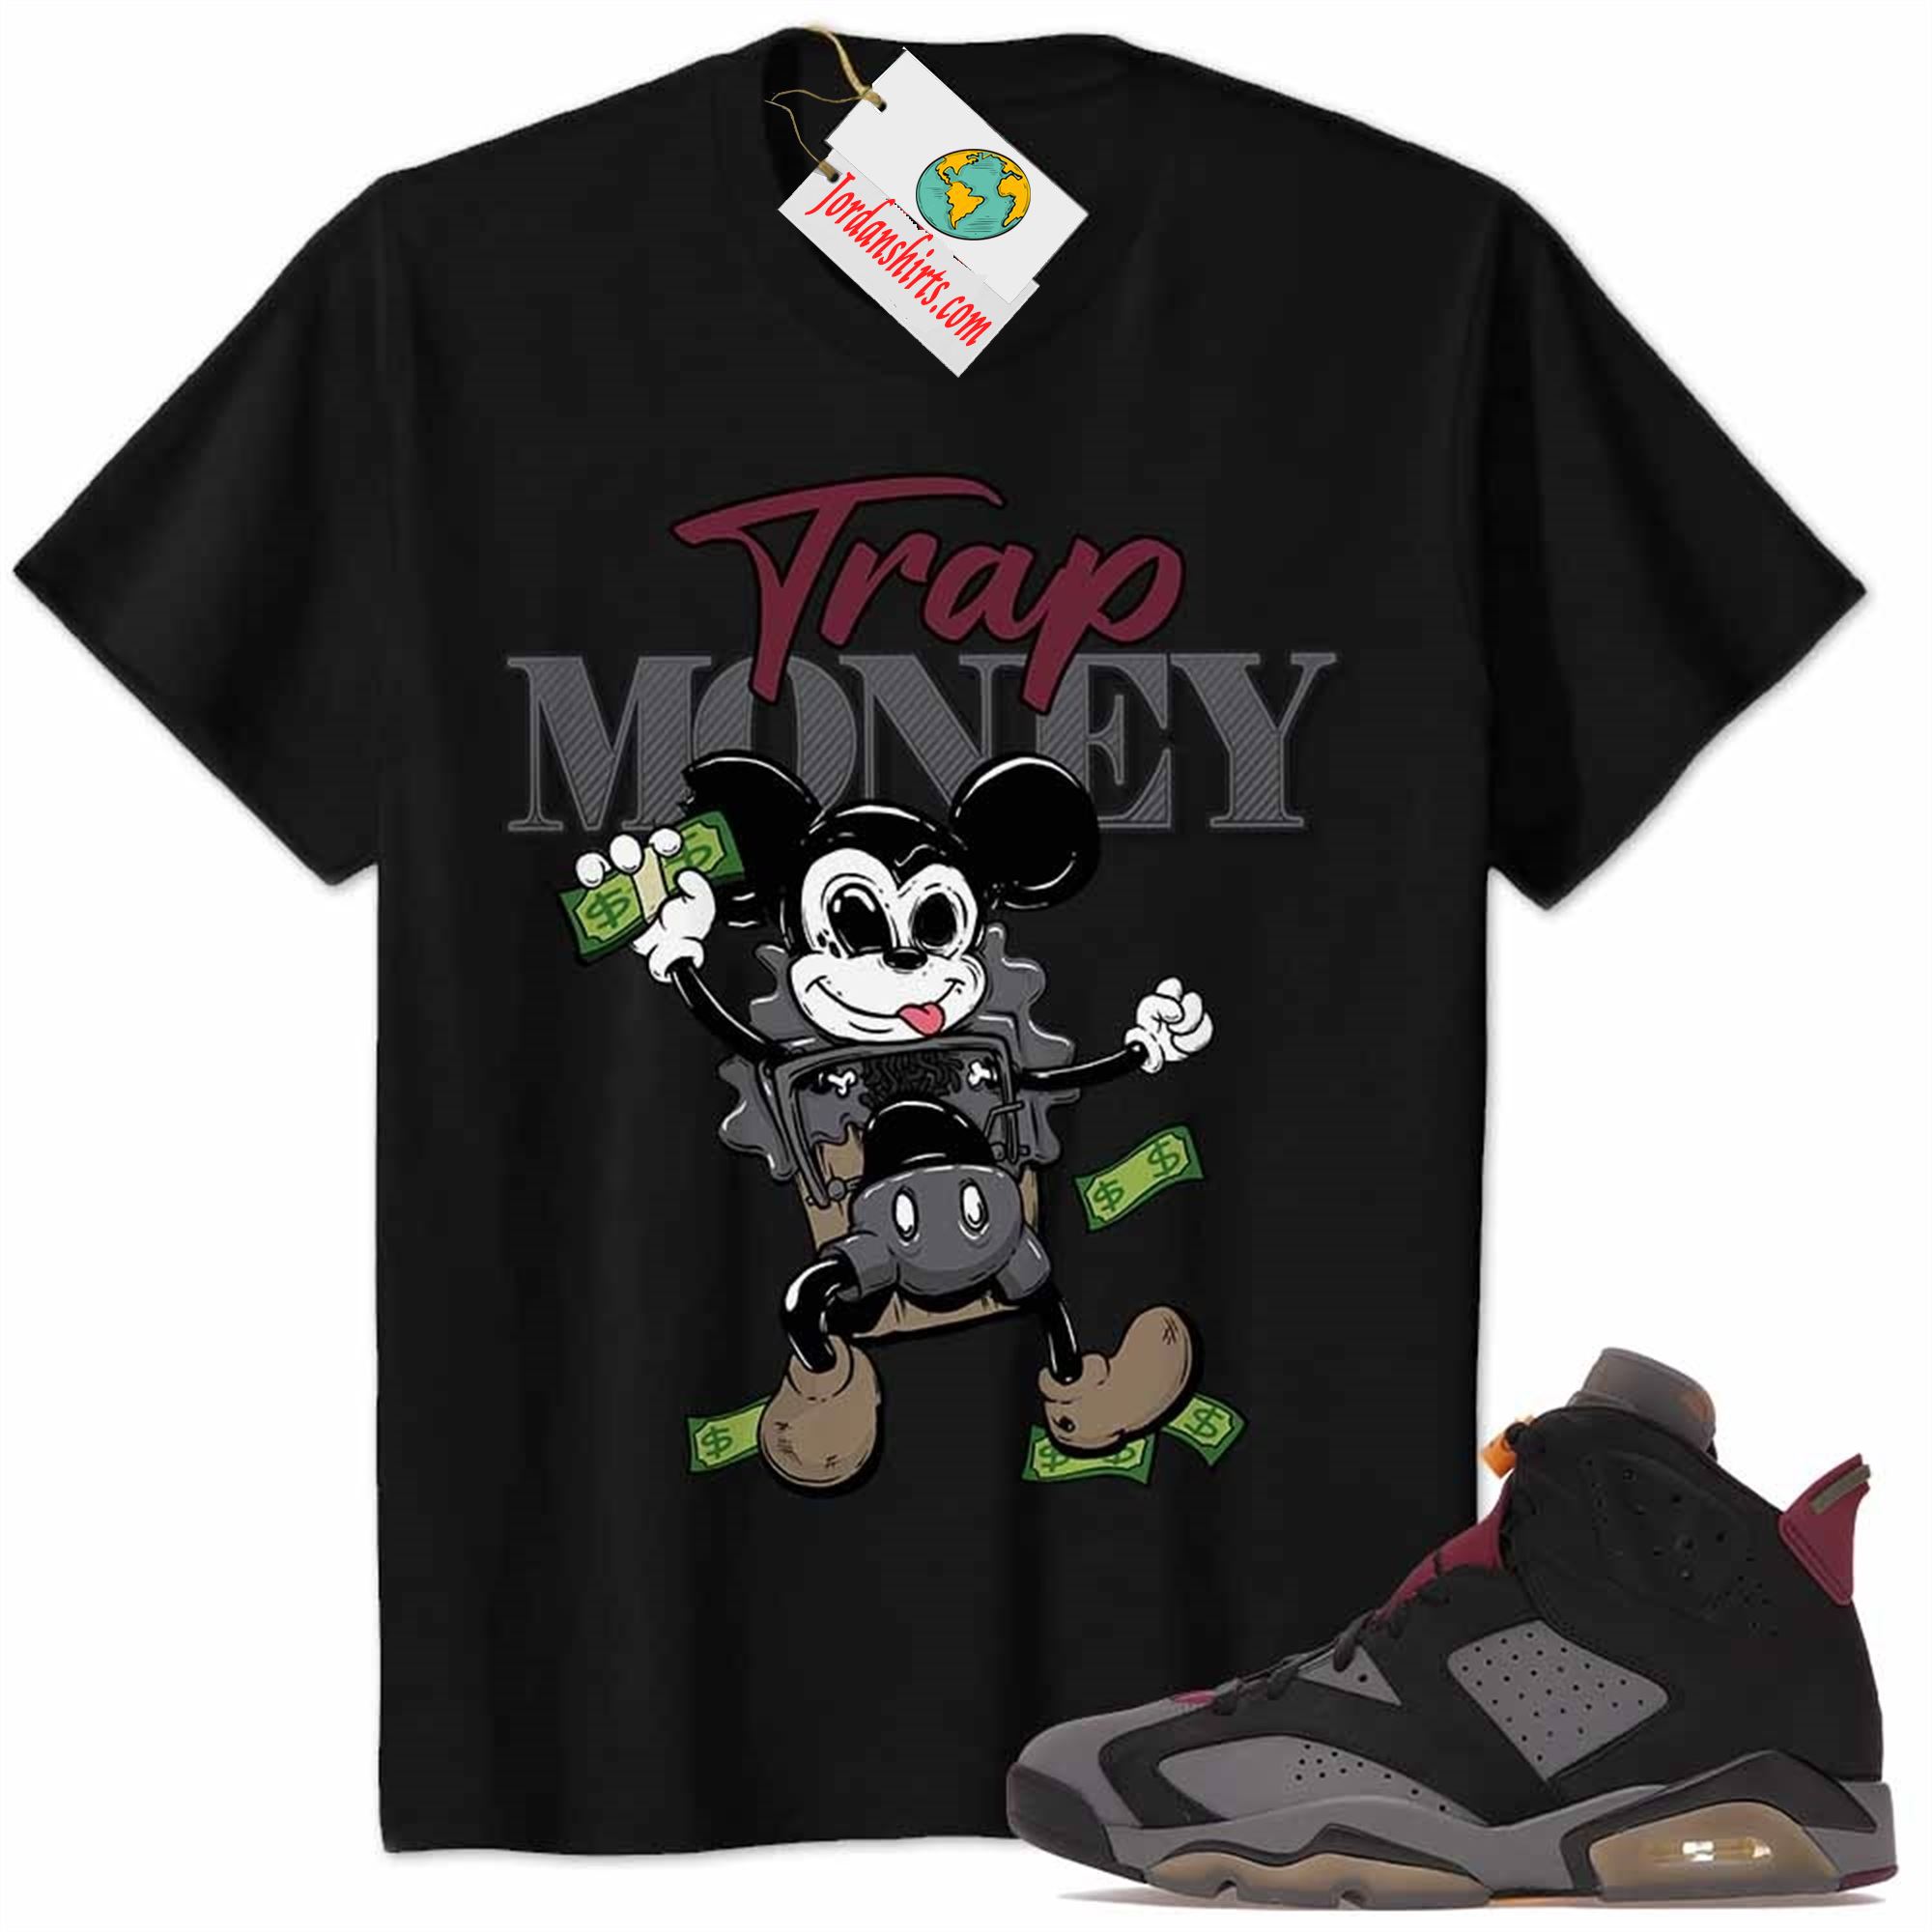 Jordan 6 Shirt, Mickey Horror Trap Money Black Air Jordan 6 Bordeaux 6s Full Size Up To 5xl